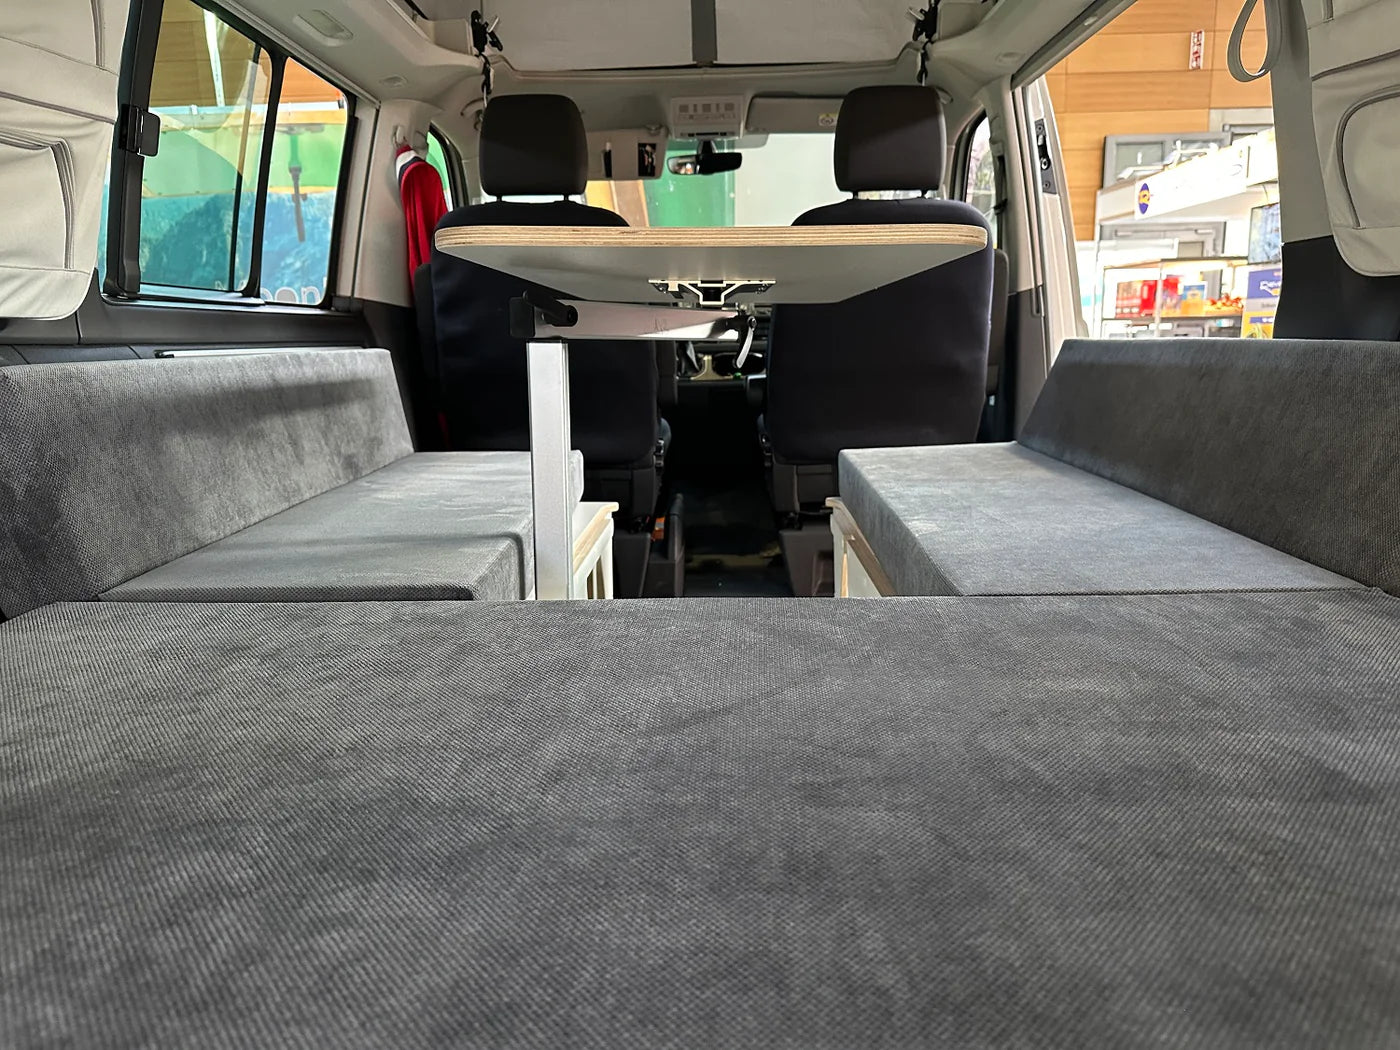 MoonBox 115 Modify Minibus/Transporter - Campervan module for larger cars